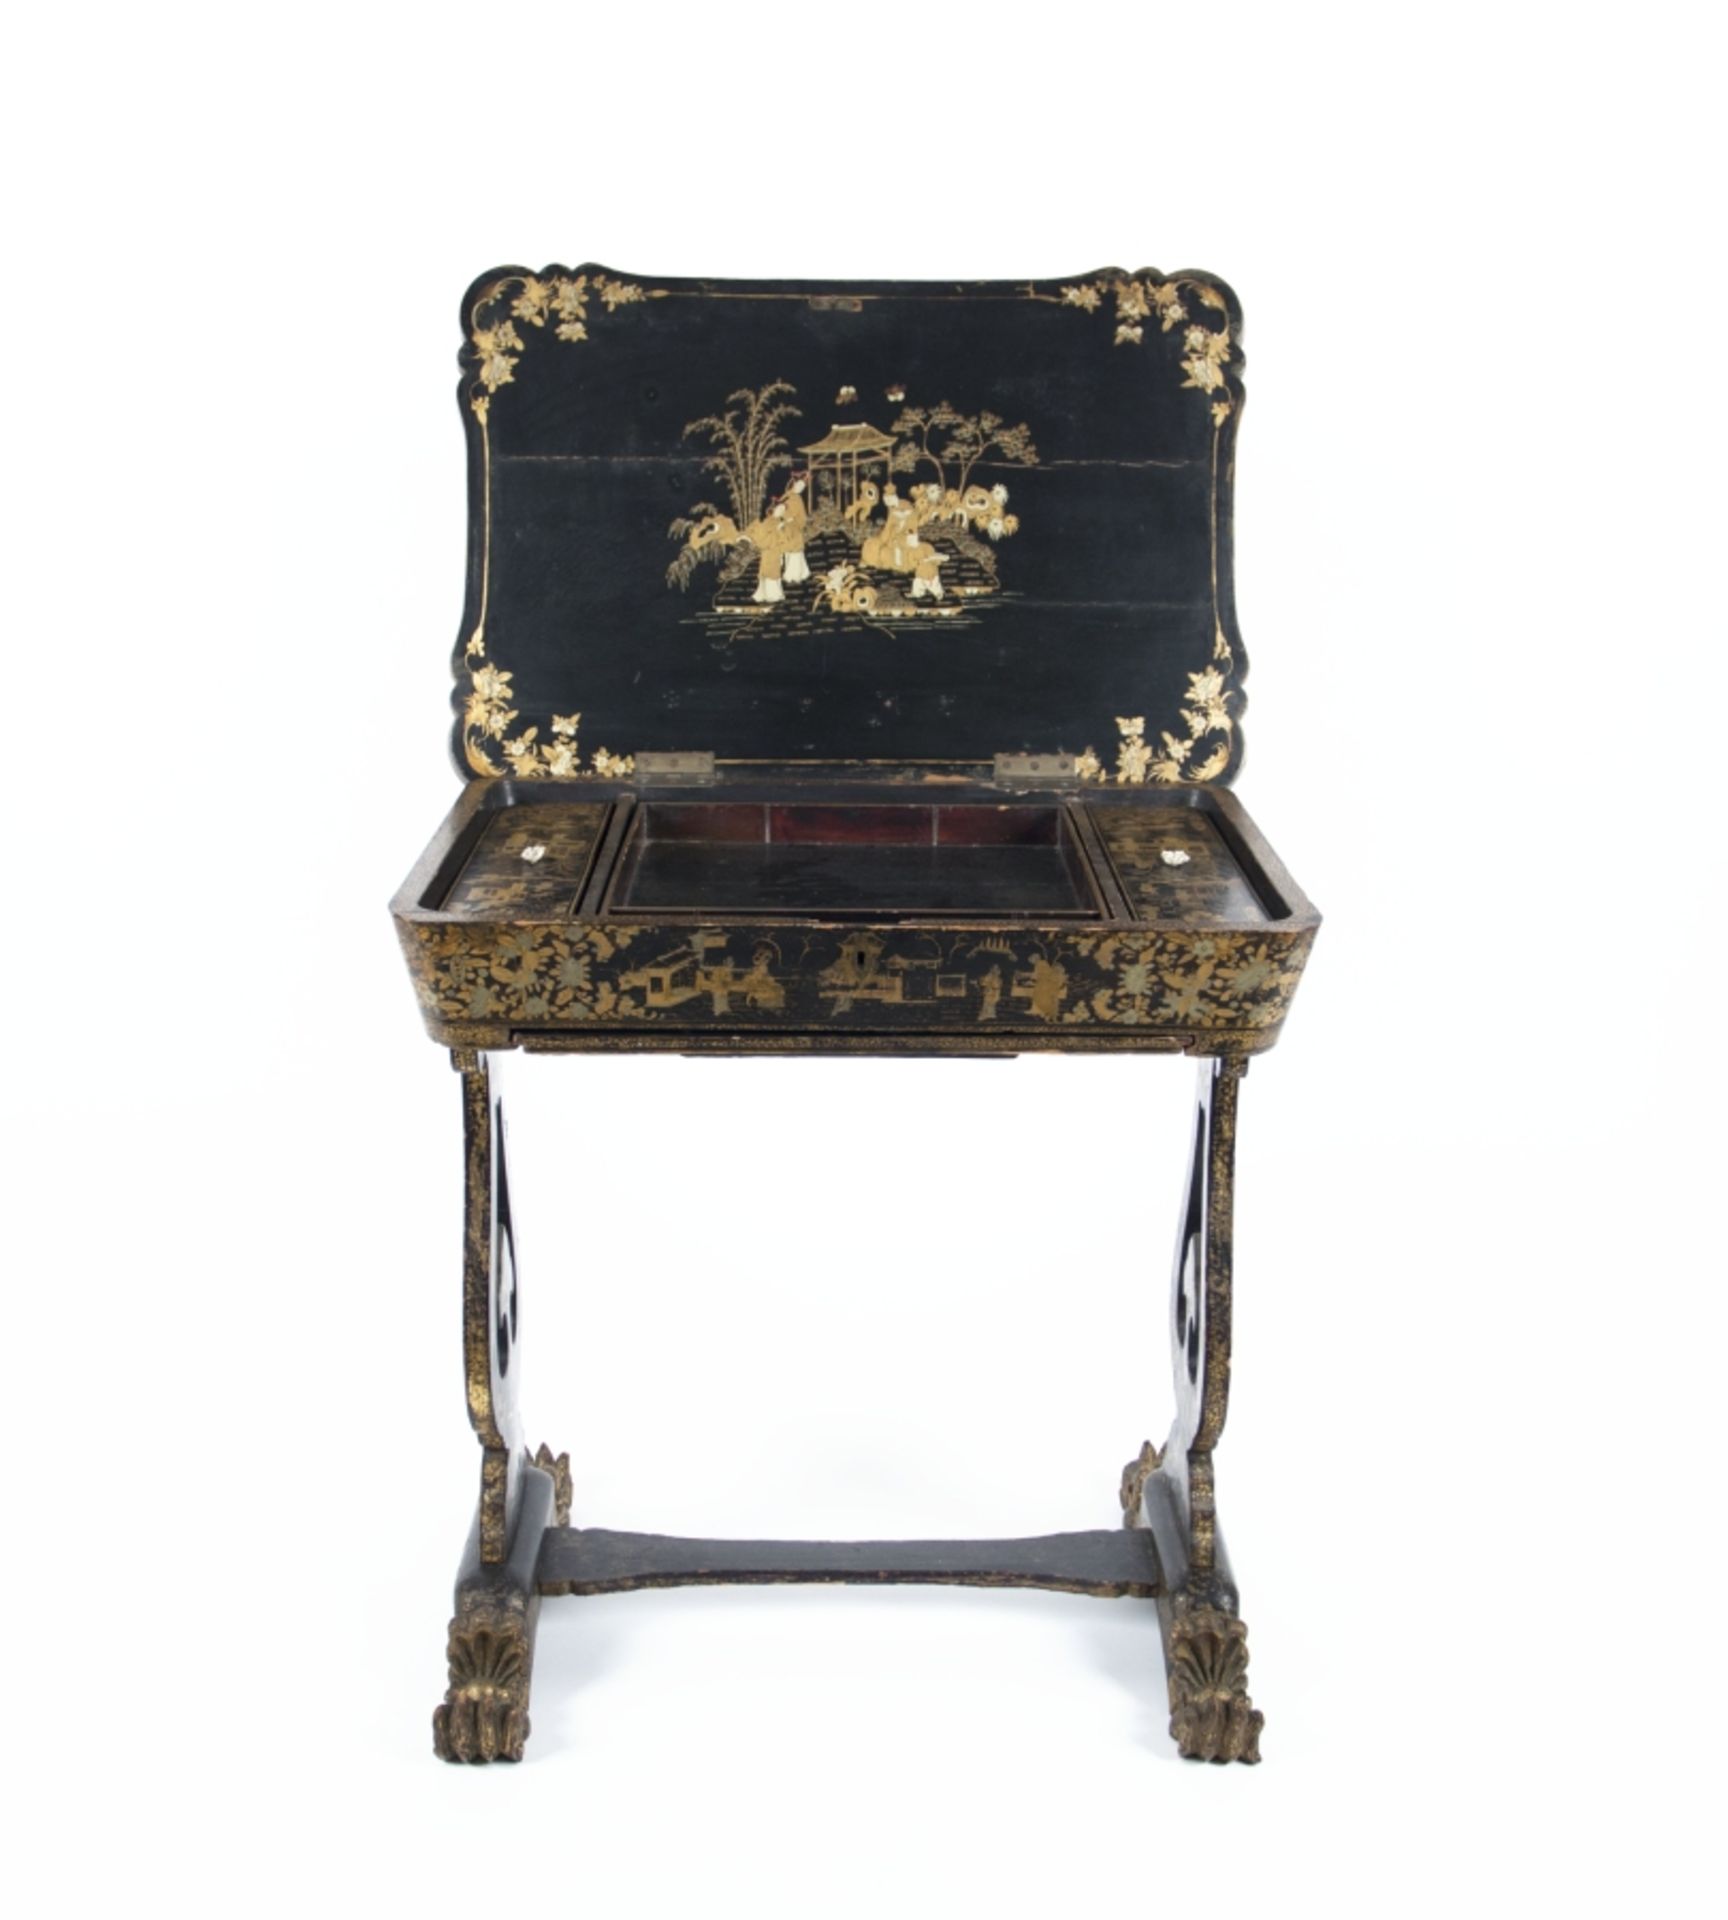 Frankreich um 1860Table de coutureChinoise Goldmalerei auf lackiertem Holz mit Intarsien au